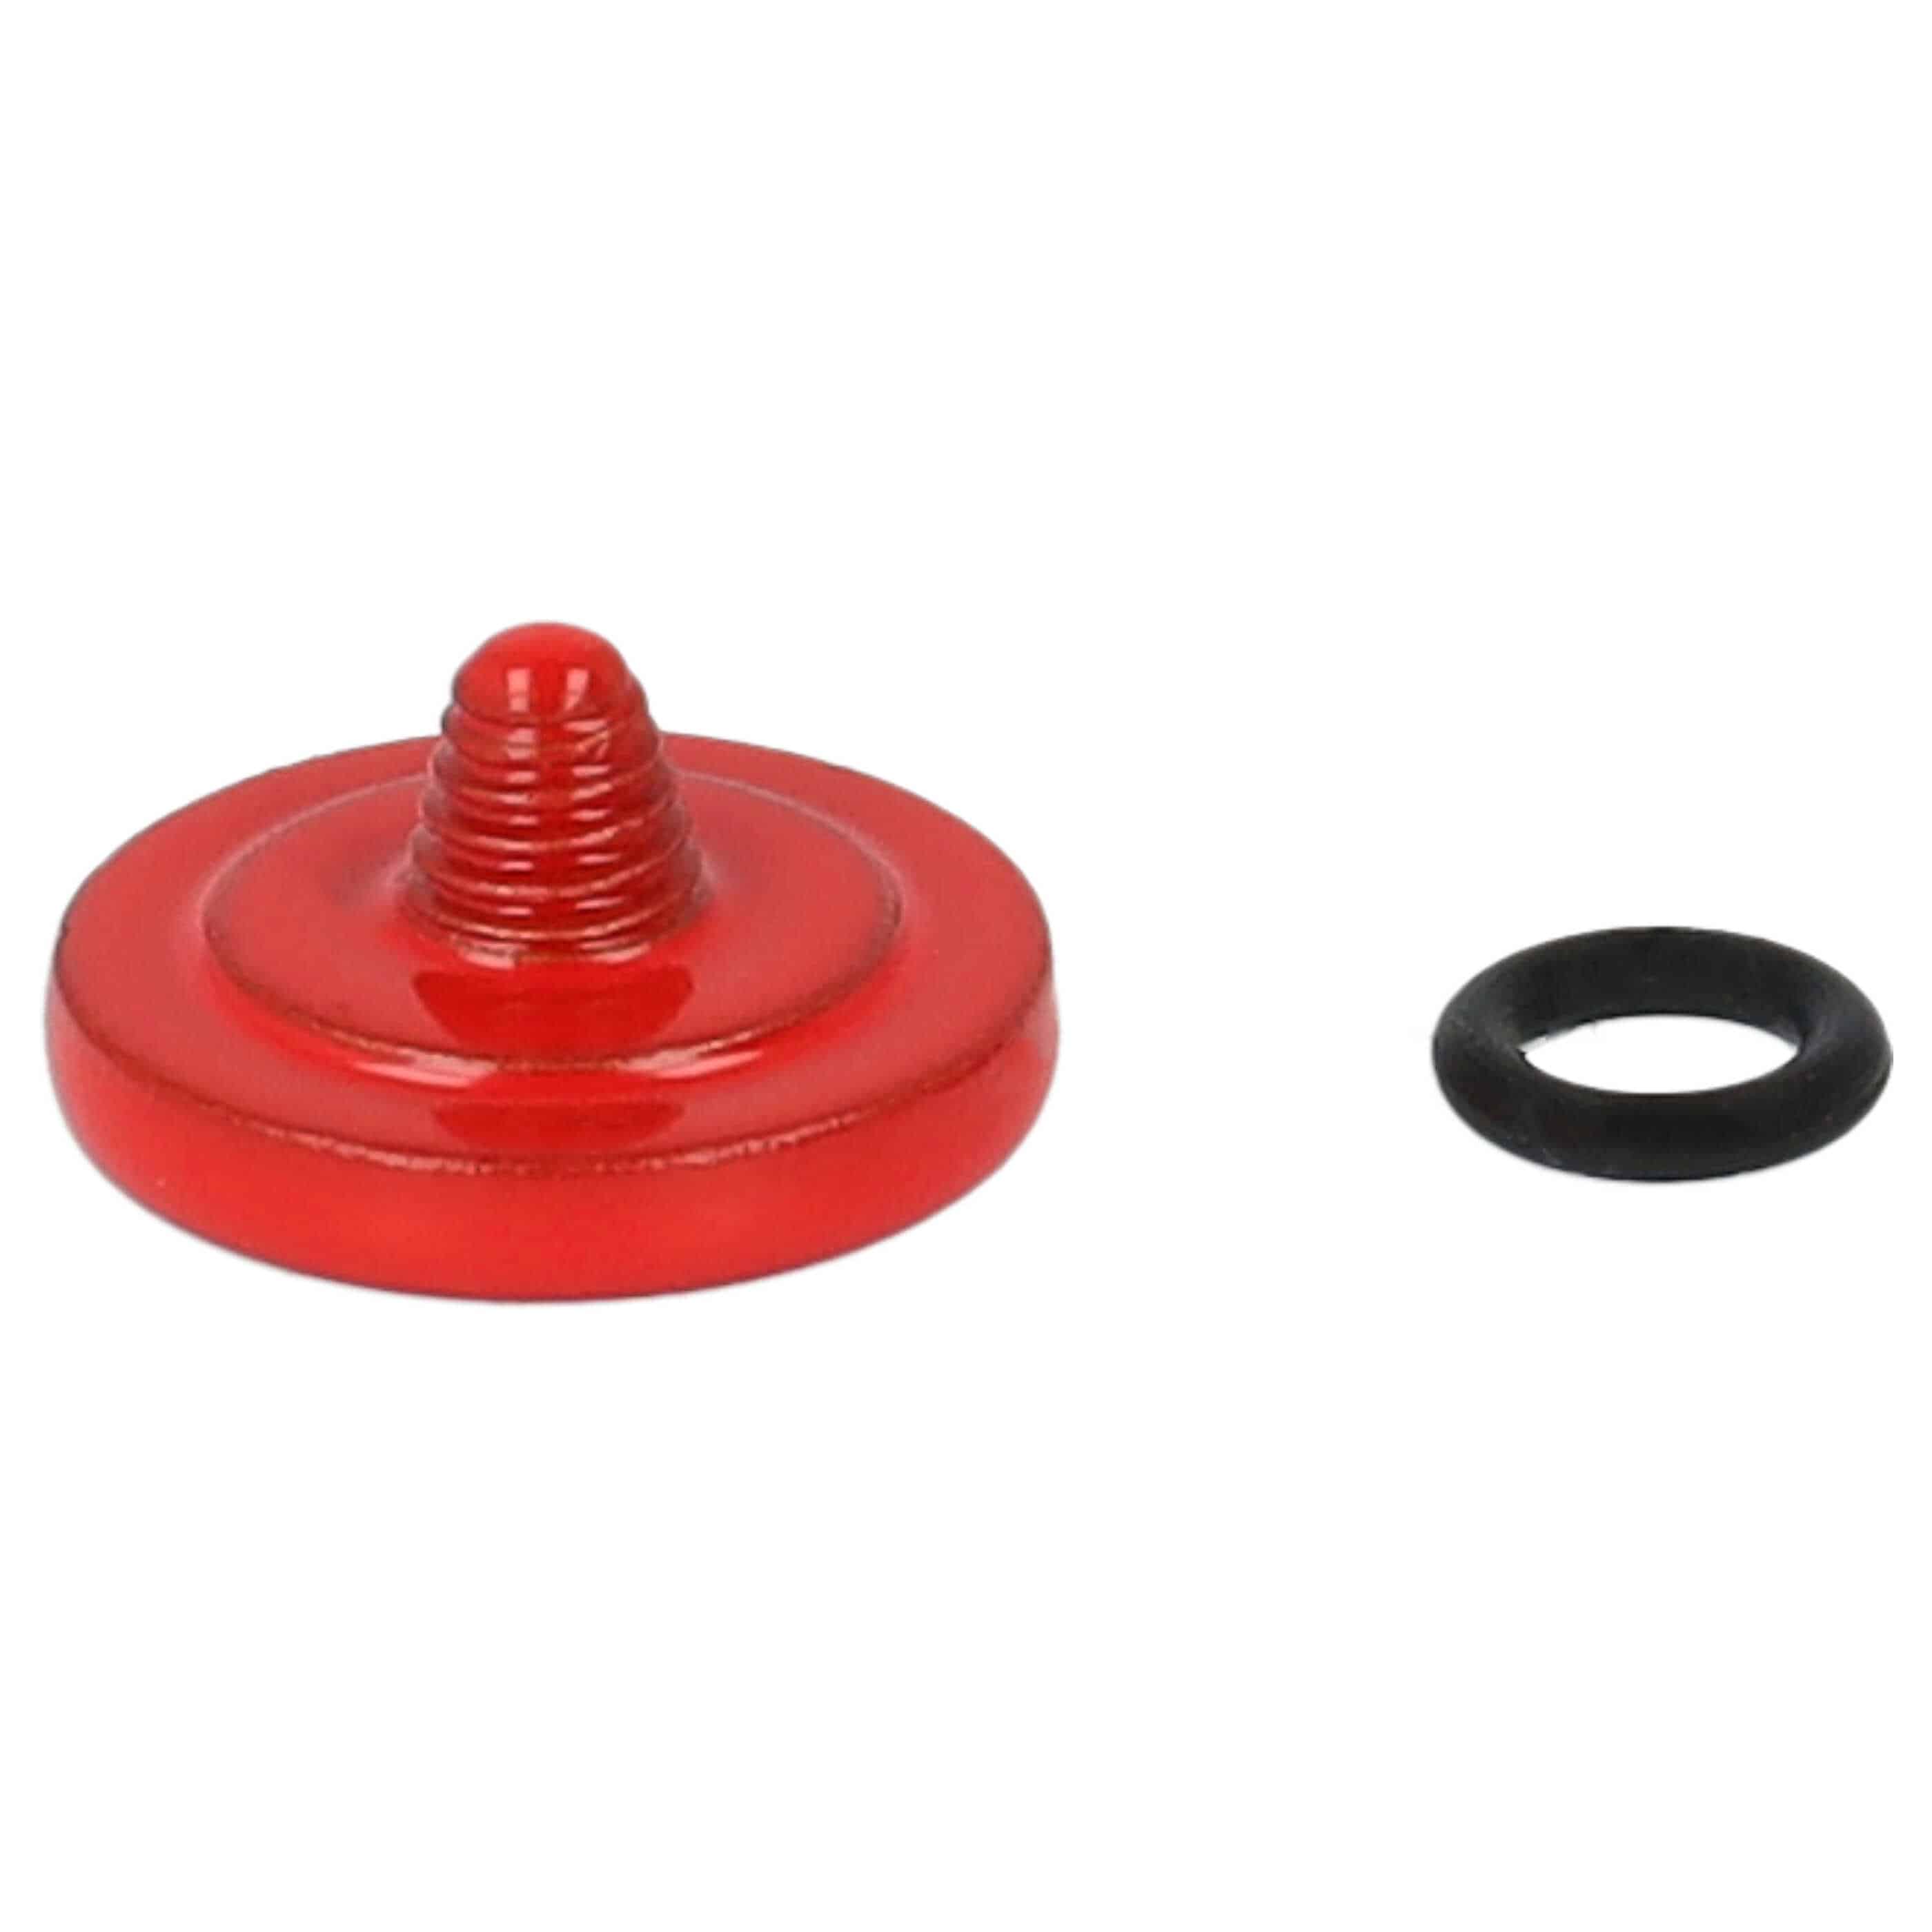 Release Button suitable for X-E1 FujifilmCamera etc. - Metal, Red